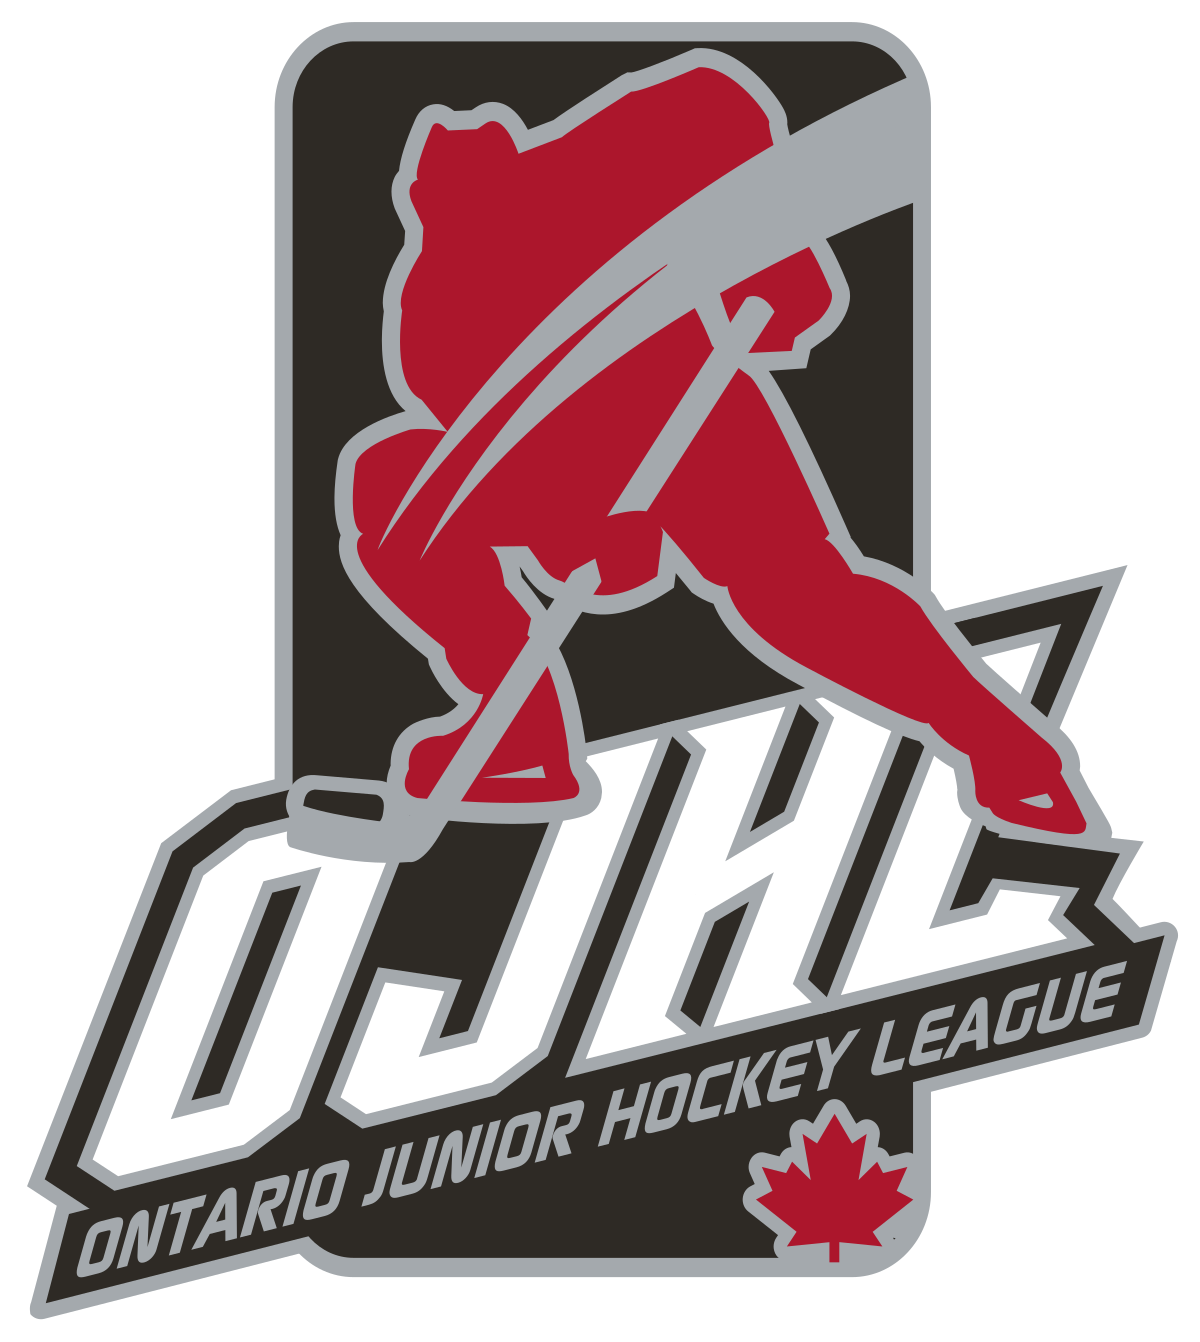 Eastern Hockey League - Wikipedia